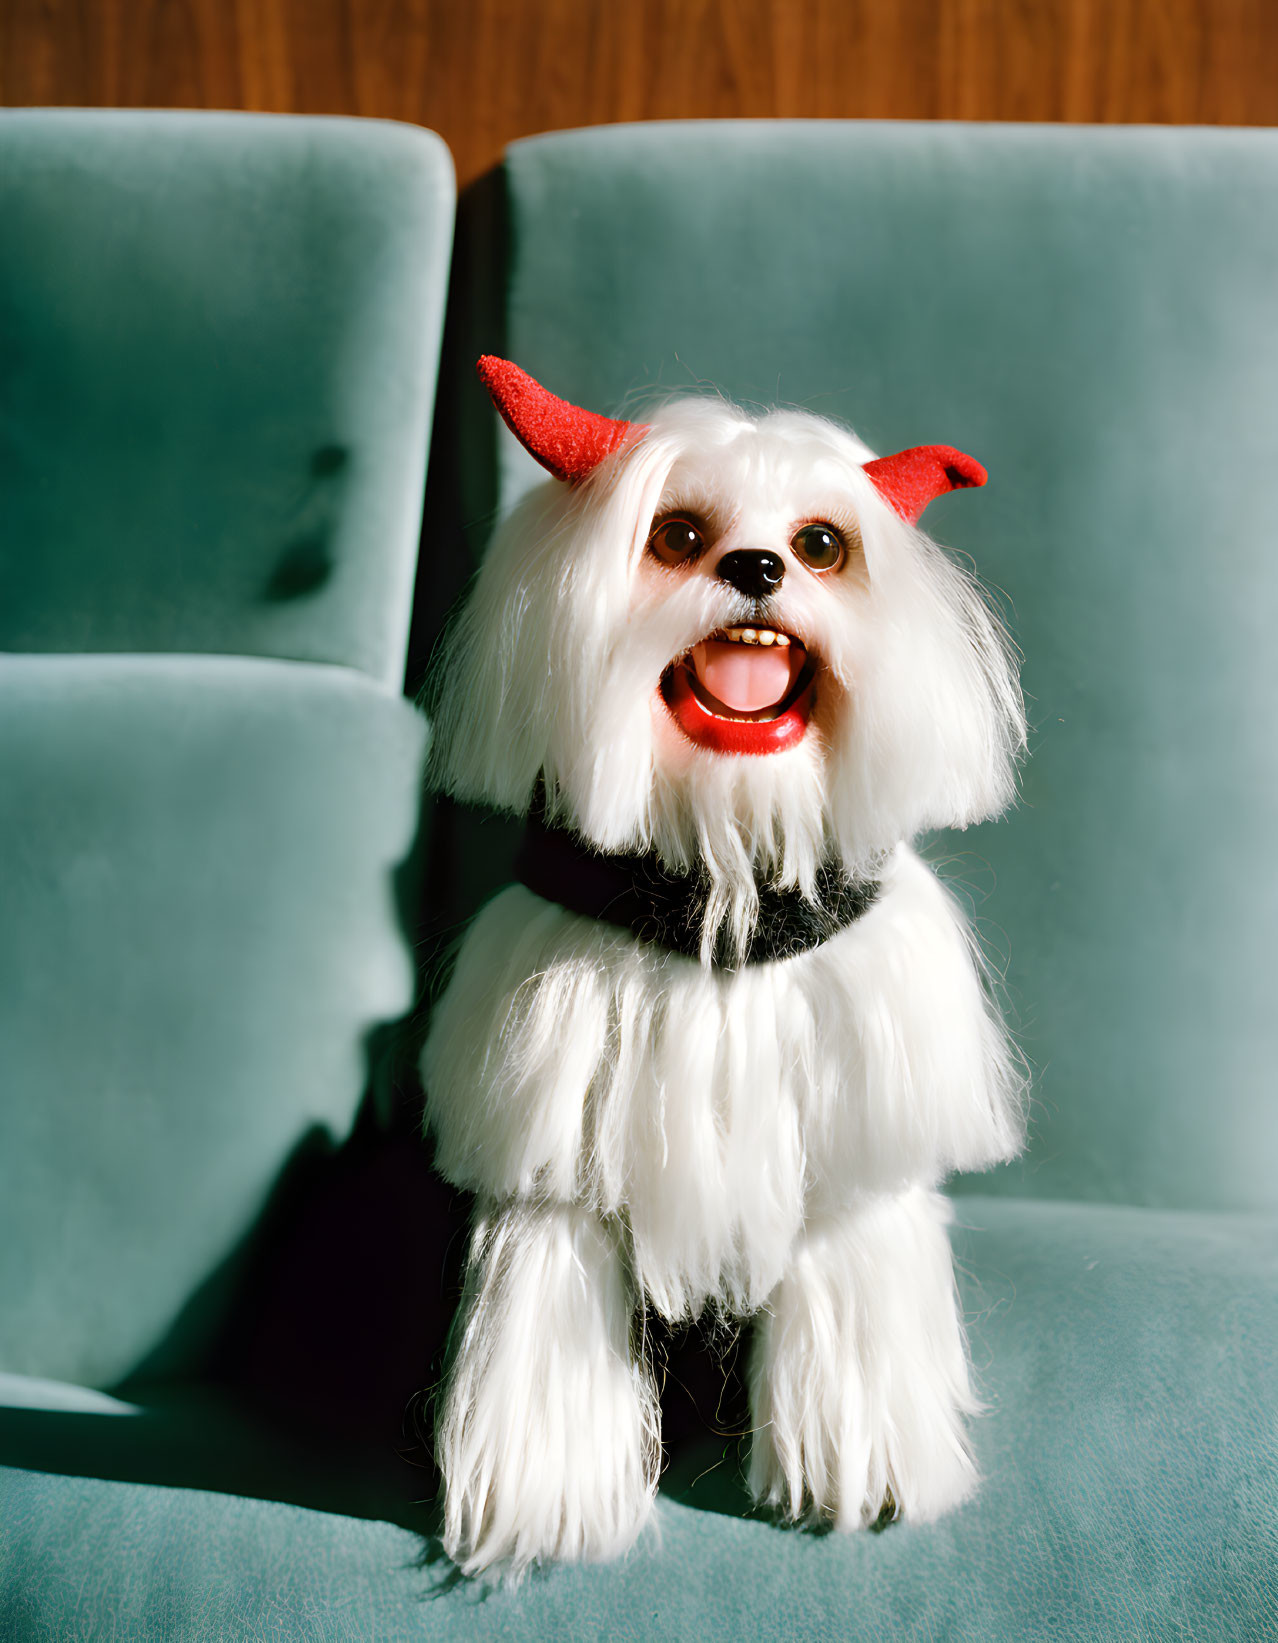 Fluffy White Dog in Red Devil Horns on Green Chair